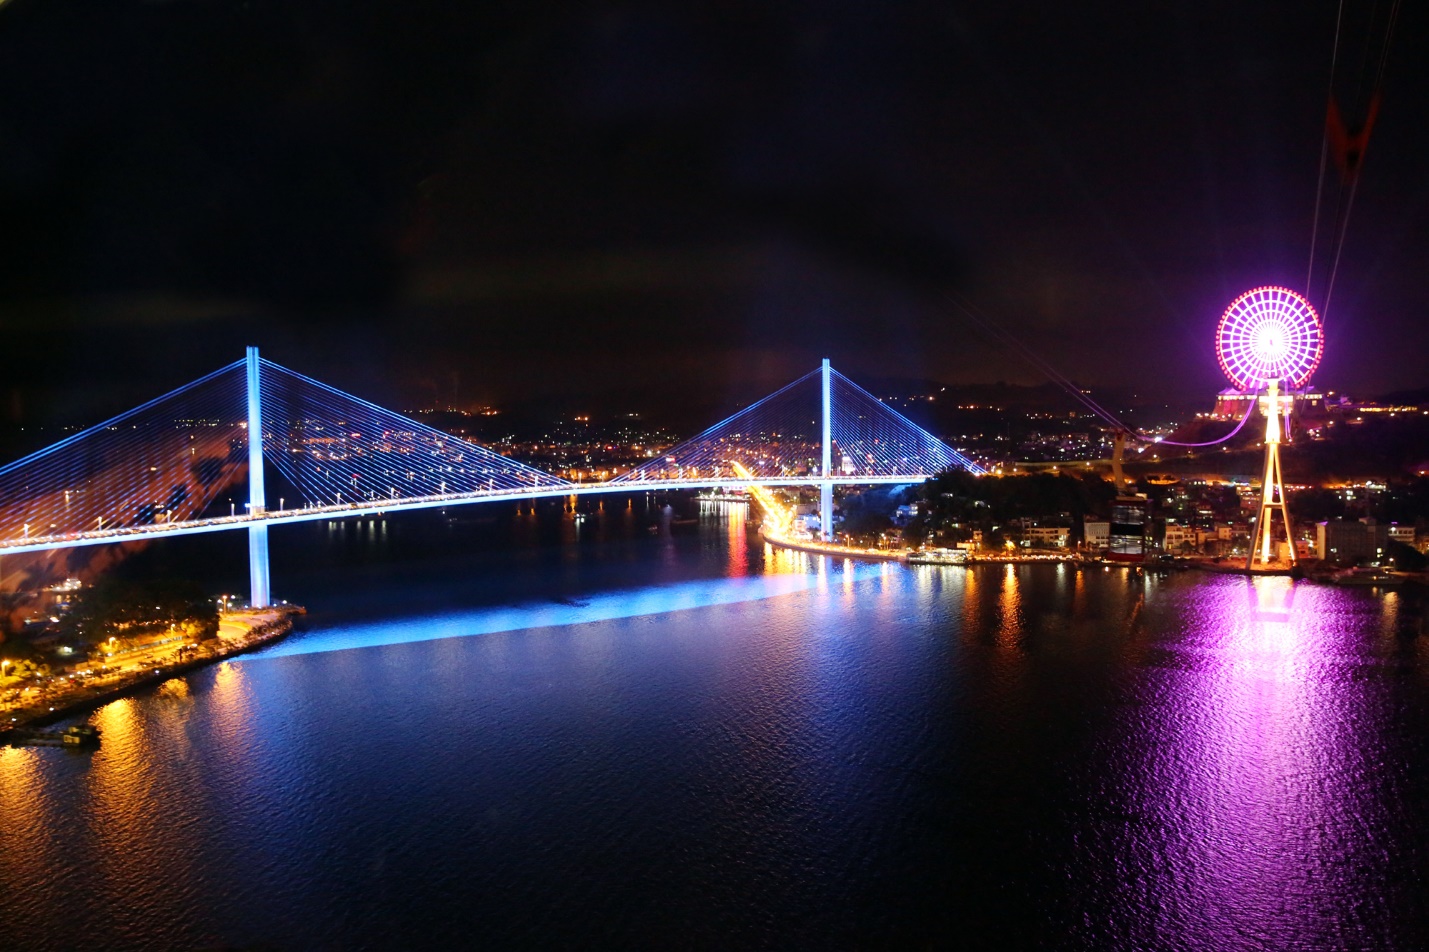 Bai Chay Bridge is sparkling at night